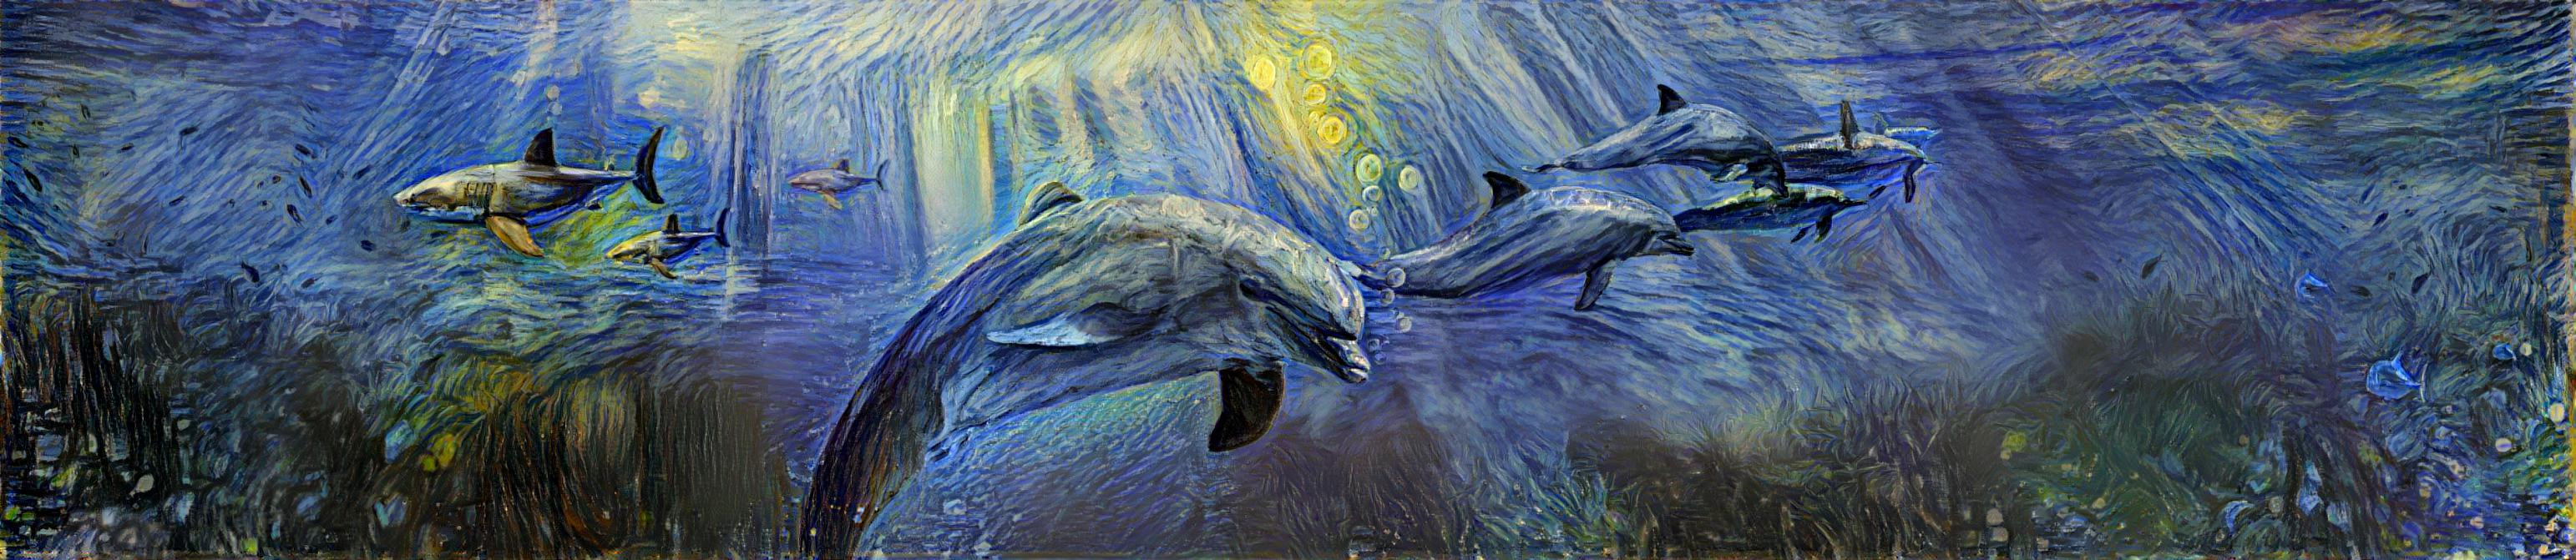 Dolphins Panorama